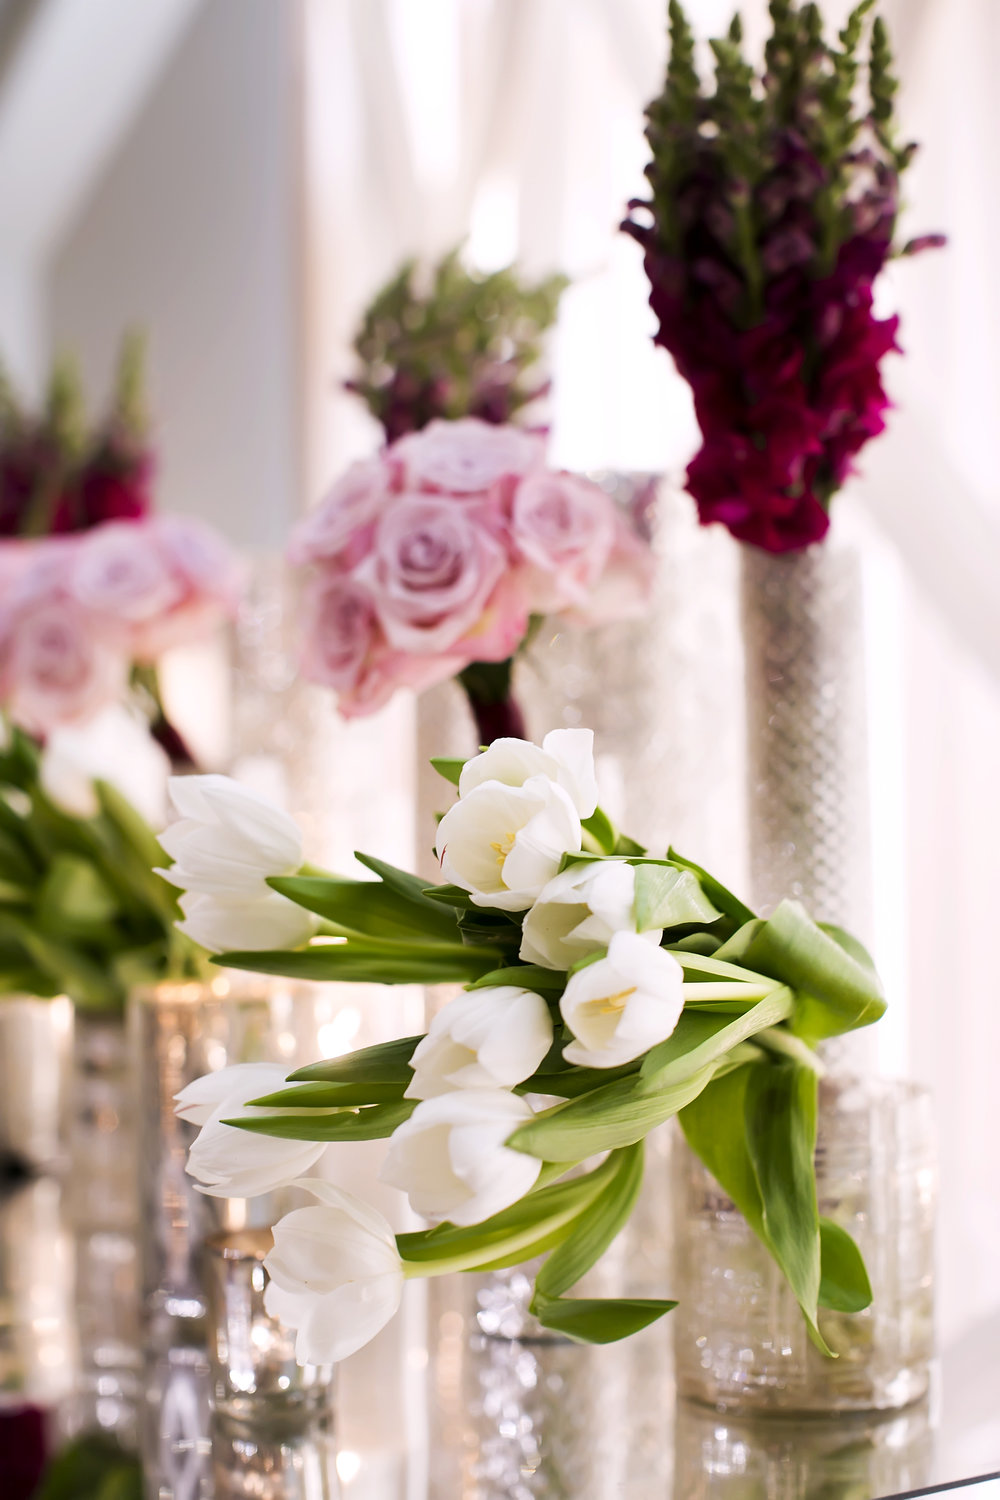 About — Haute Floral - Luxury Florist in Dallas